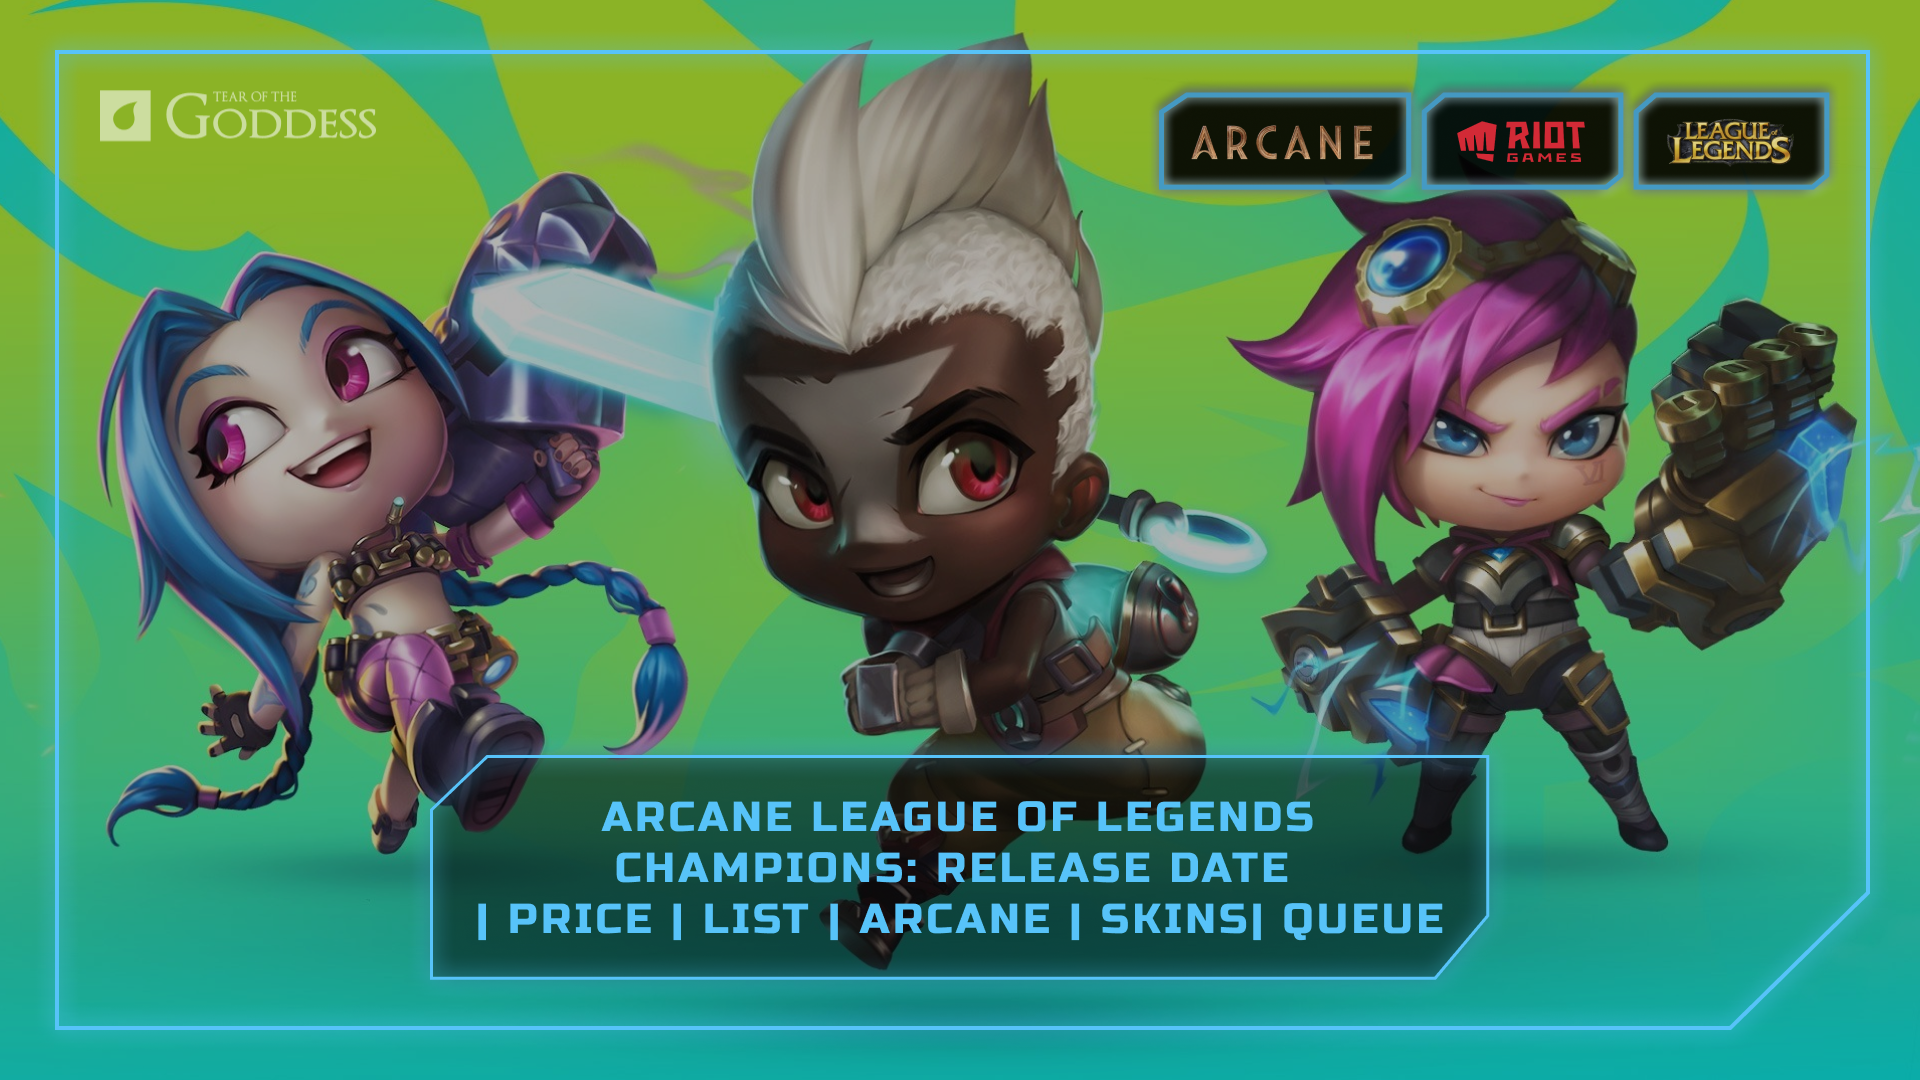 Arcane League of Legends Champions: LoL Champions Release Date